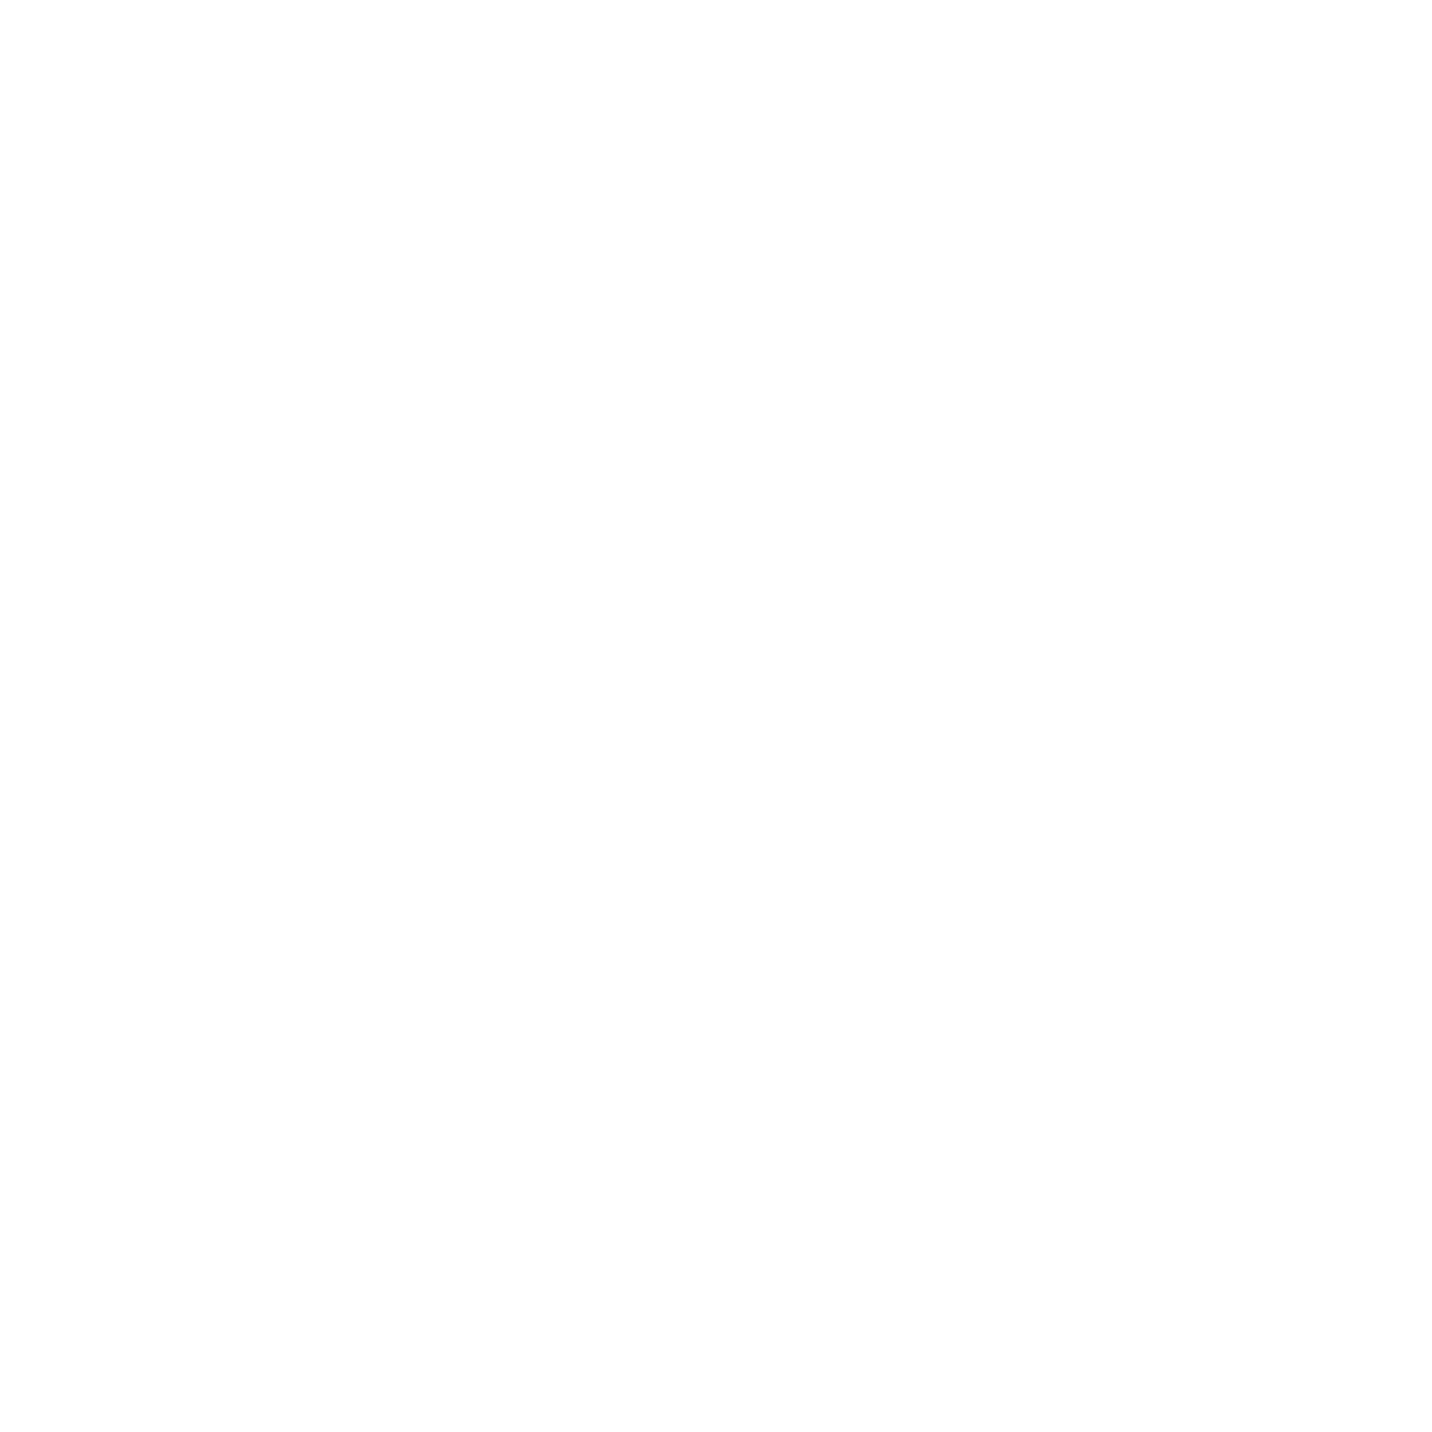 Lake Hills CA